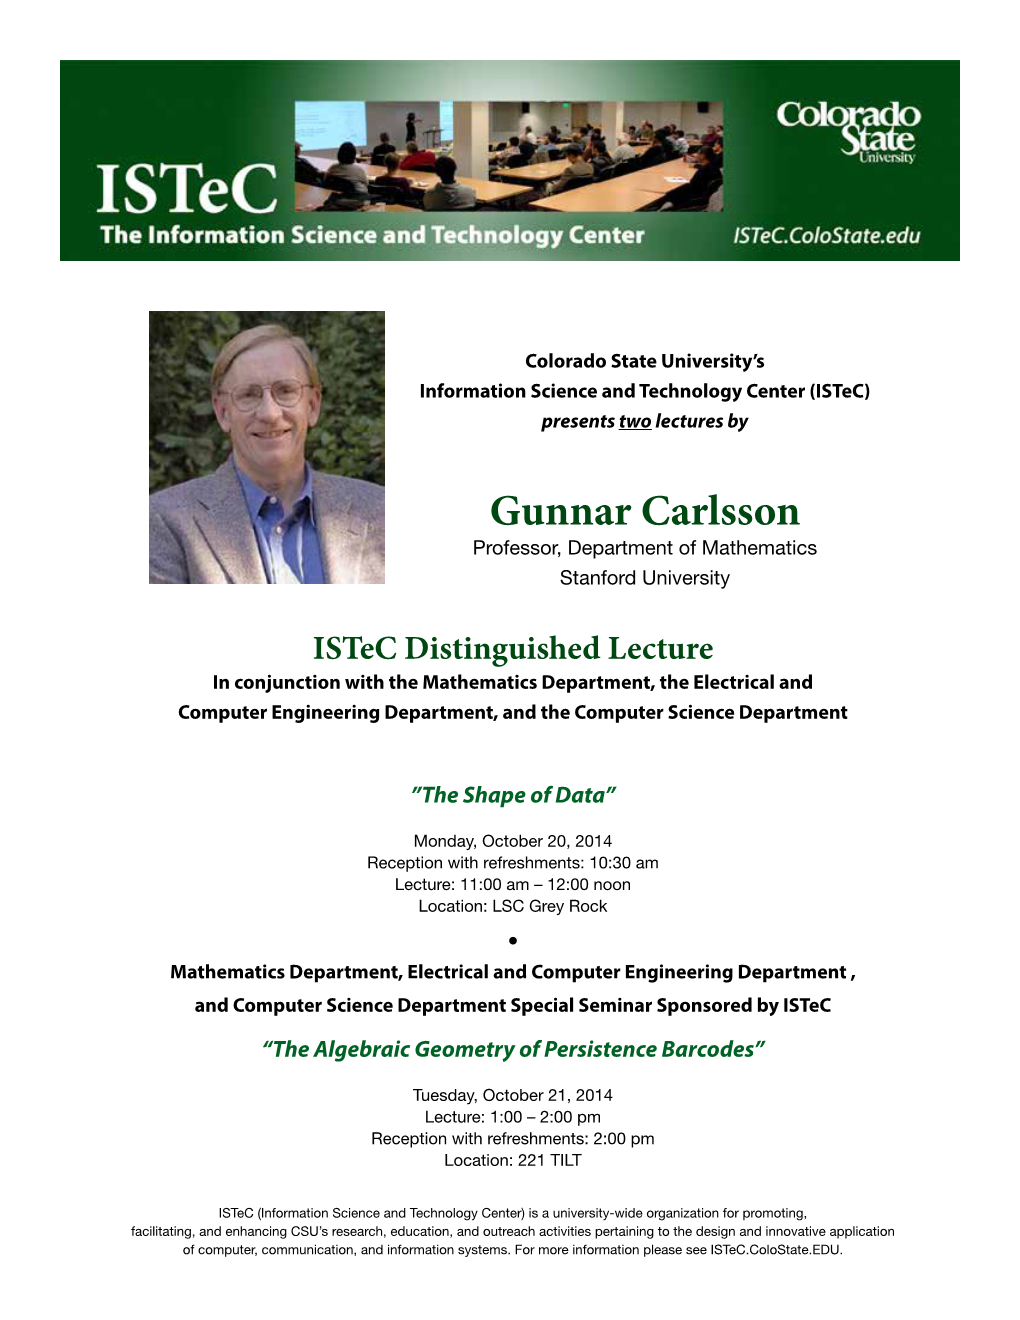 Gunnar Carlsson Professor, Department of Mathematics Stanford University